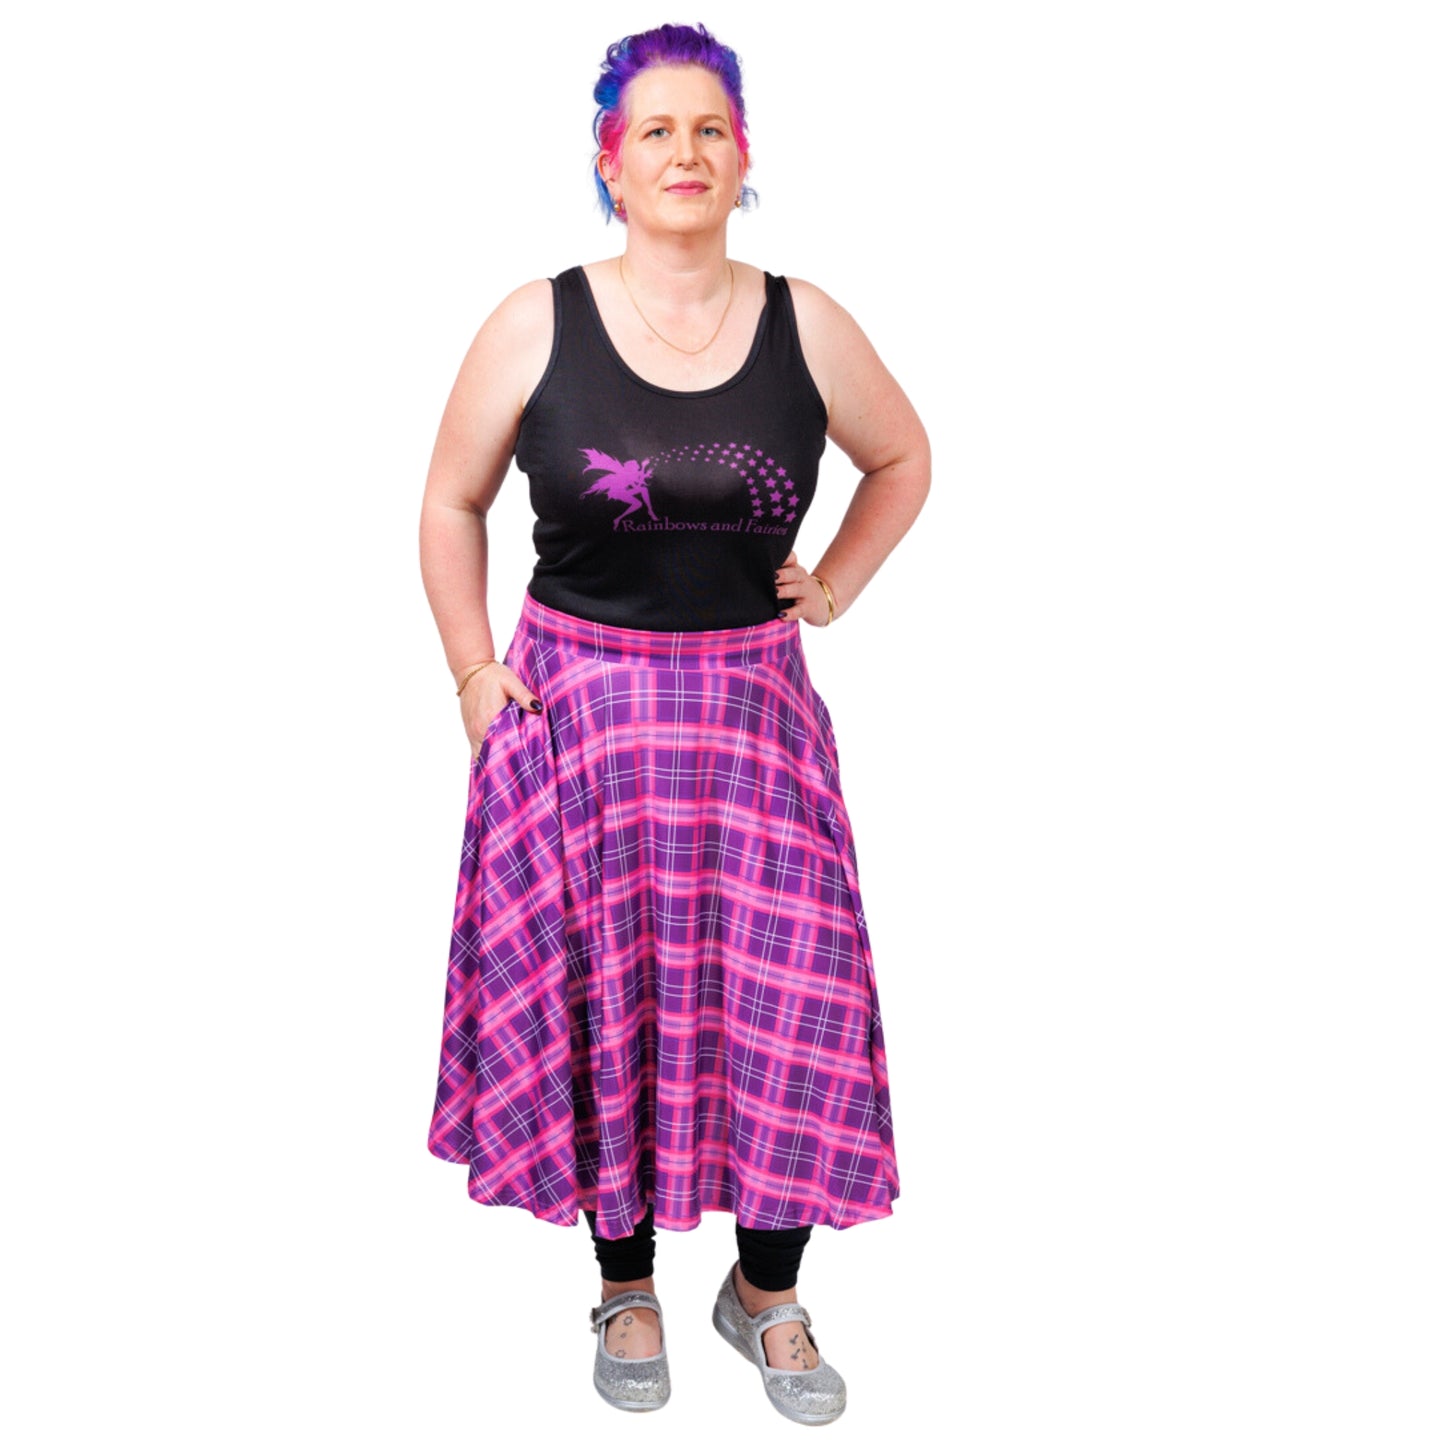 Purple Plaid Swishy Skirt by RainbowsAndFairies.com (Purple Check - Tartan - Skirt With Pockets - Circle Skirt  - Vintage Inspired) - SKU: CL_SWISH_PLAID_PUR - Pic 03